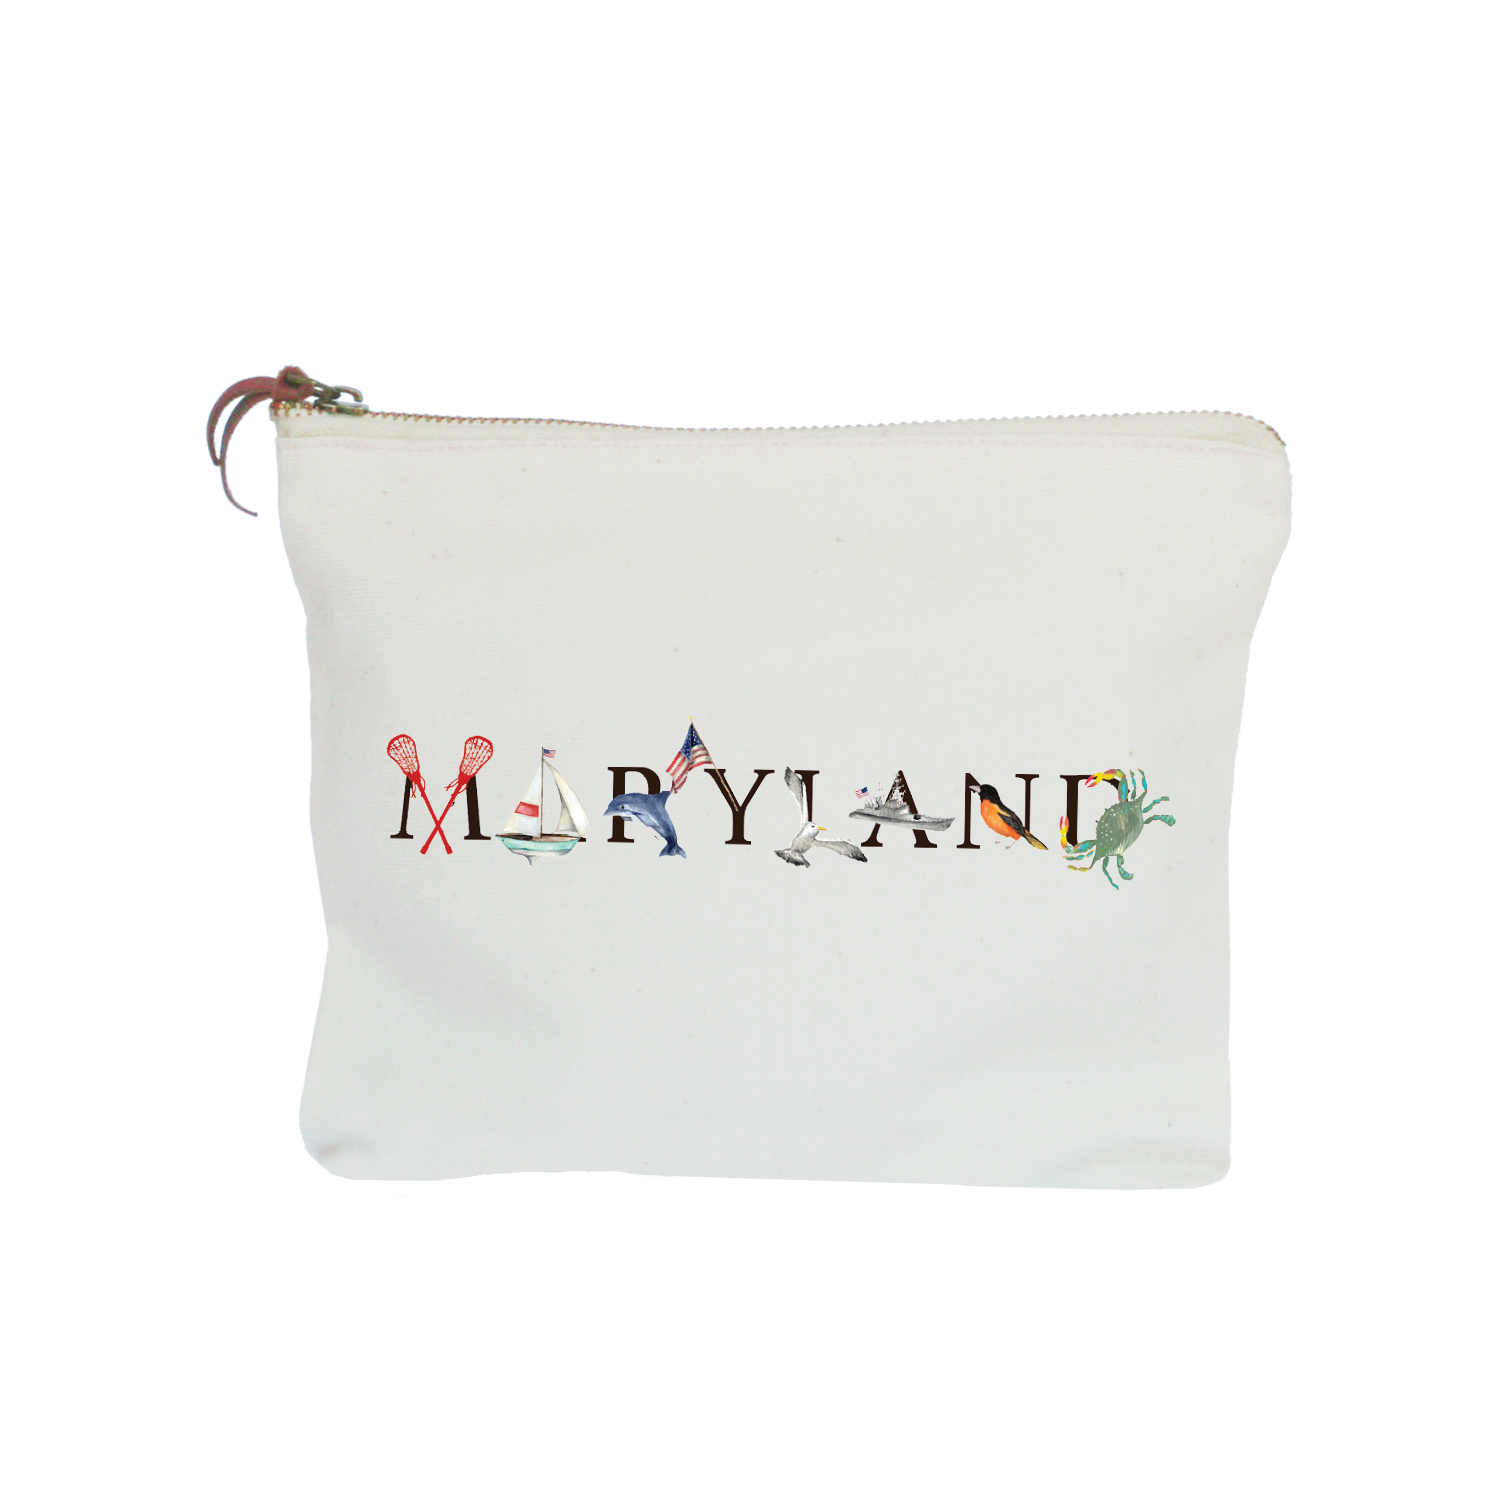 Maryland zipper pouch